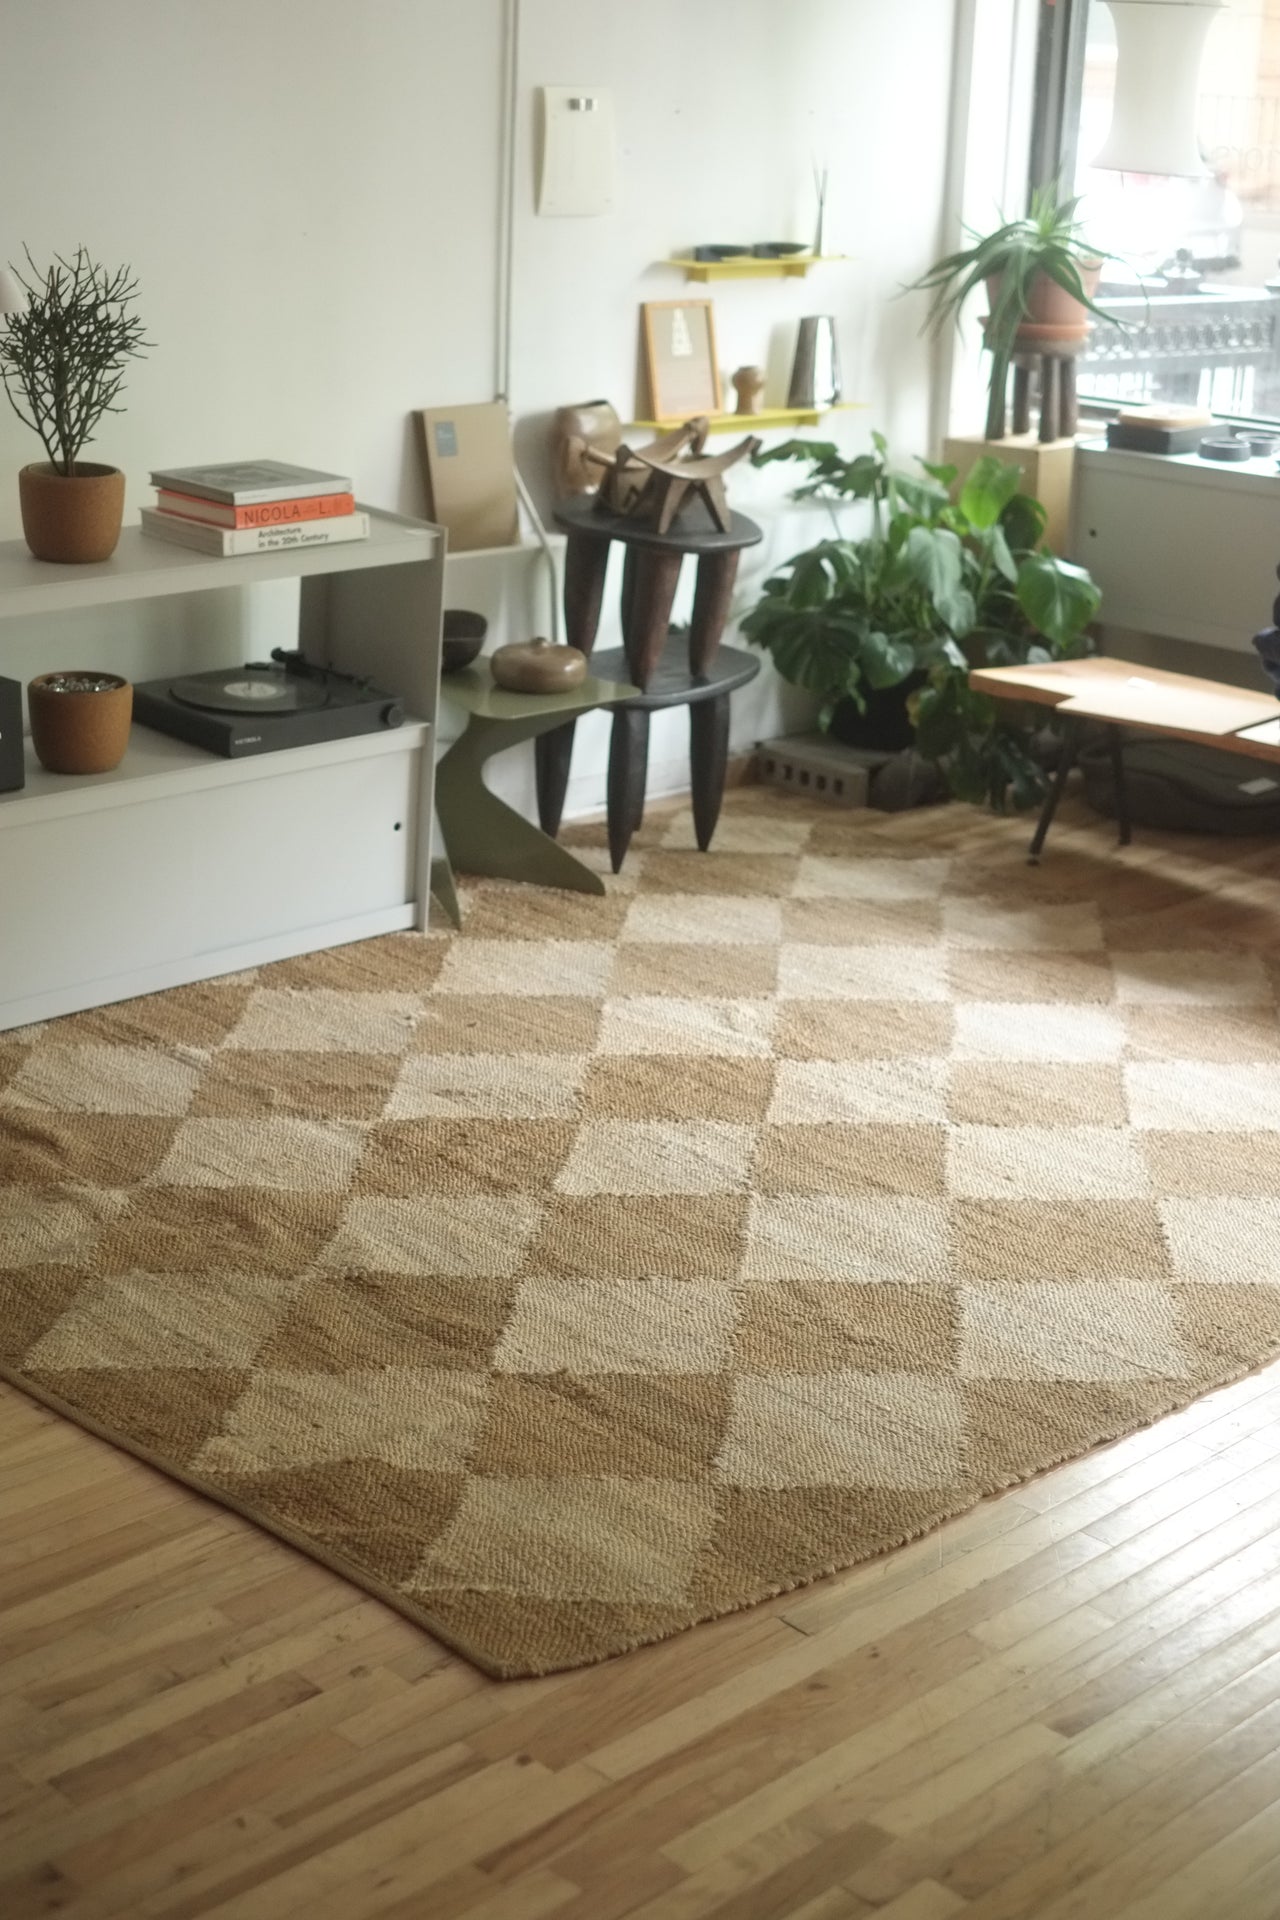 Jute patterned area rug 10' x 8.5'